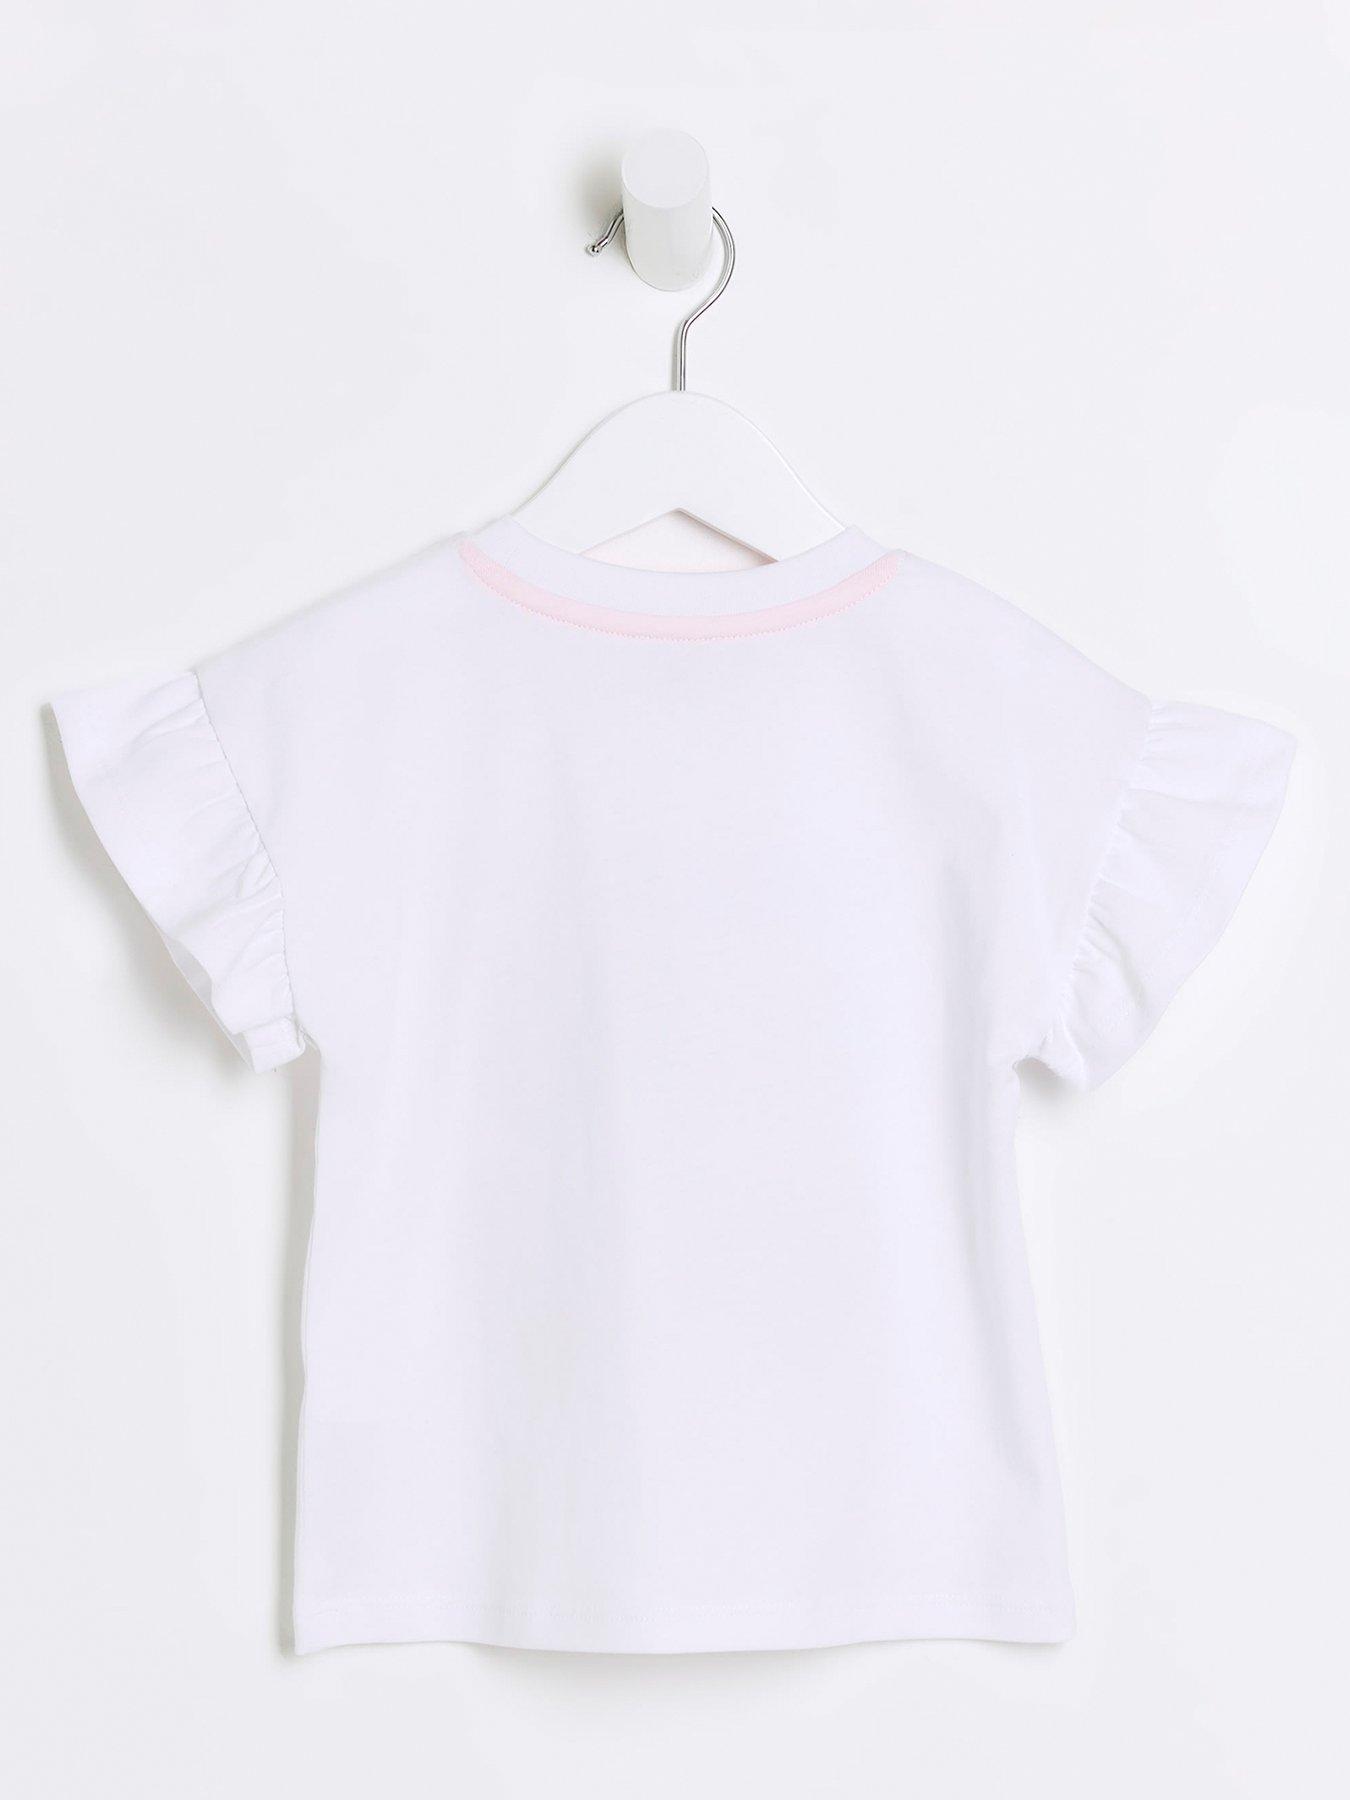 River Island Mini Mini Girls Graphic Print T-shirt - White | Very.co.uk